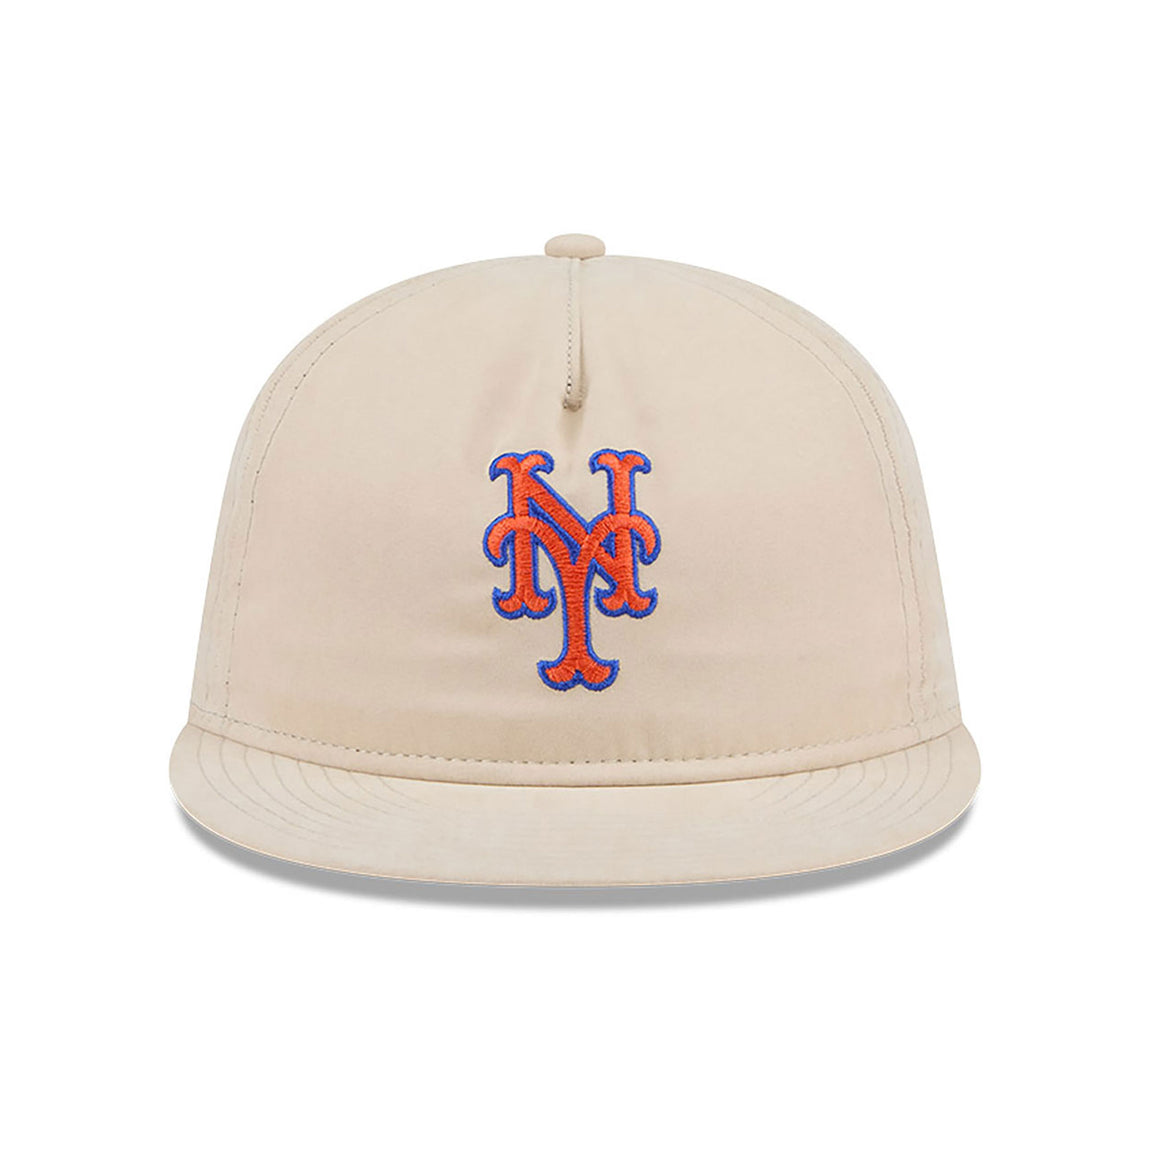 New Era 9FIFTY New York Mets Brushed Nylon Strapback Cap (Cream) - New Era 9FIFTY New York Mets Brushed Nylon Strapback Cap (Cream) - 